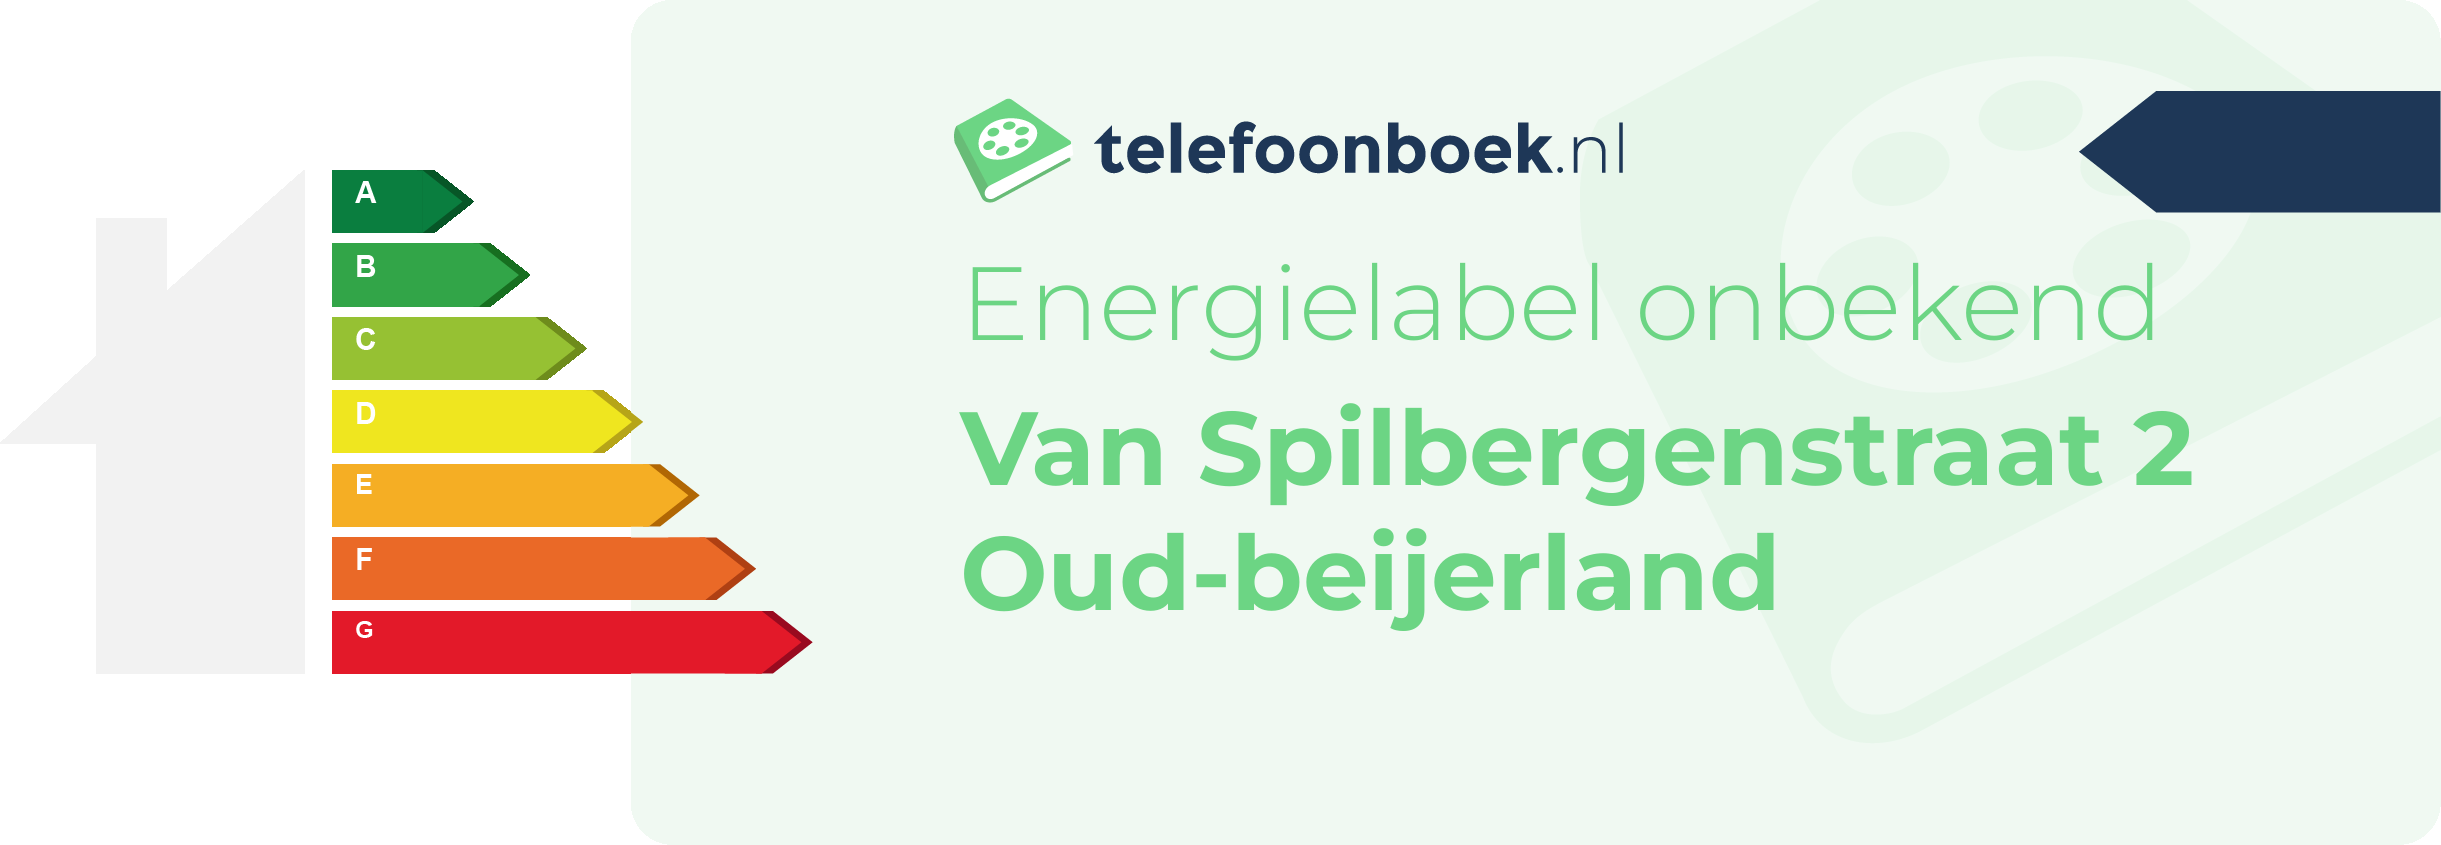 Energielabel Van Spilbergenstraat 2 Oud-Beijerland